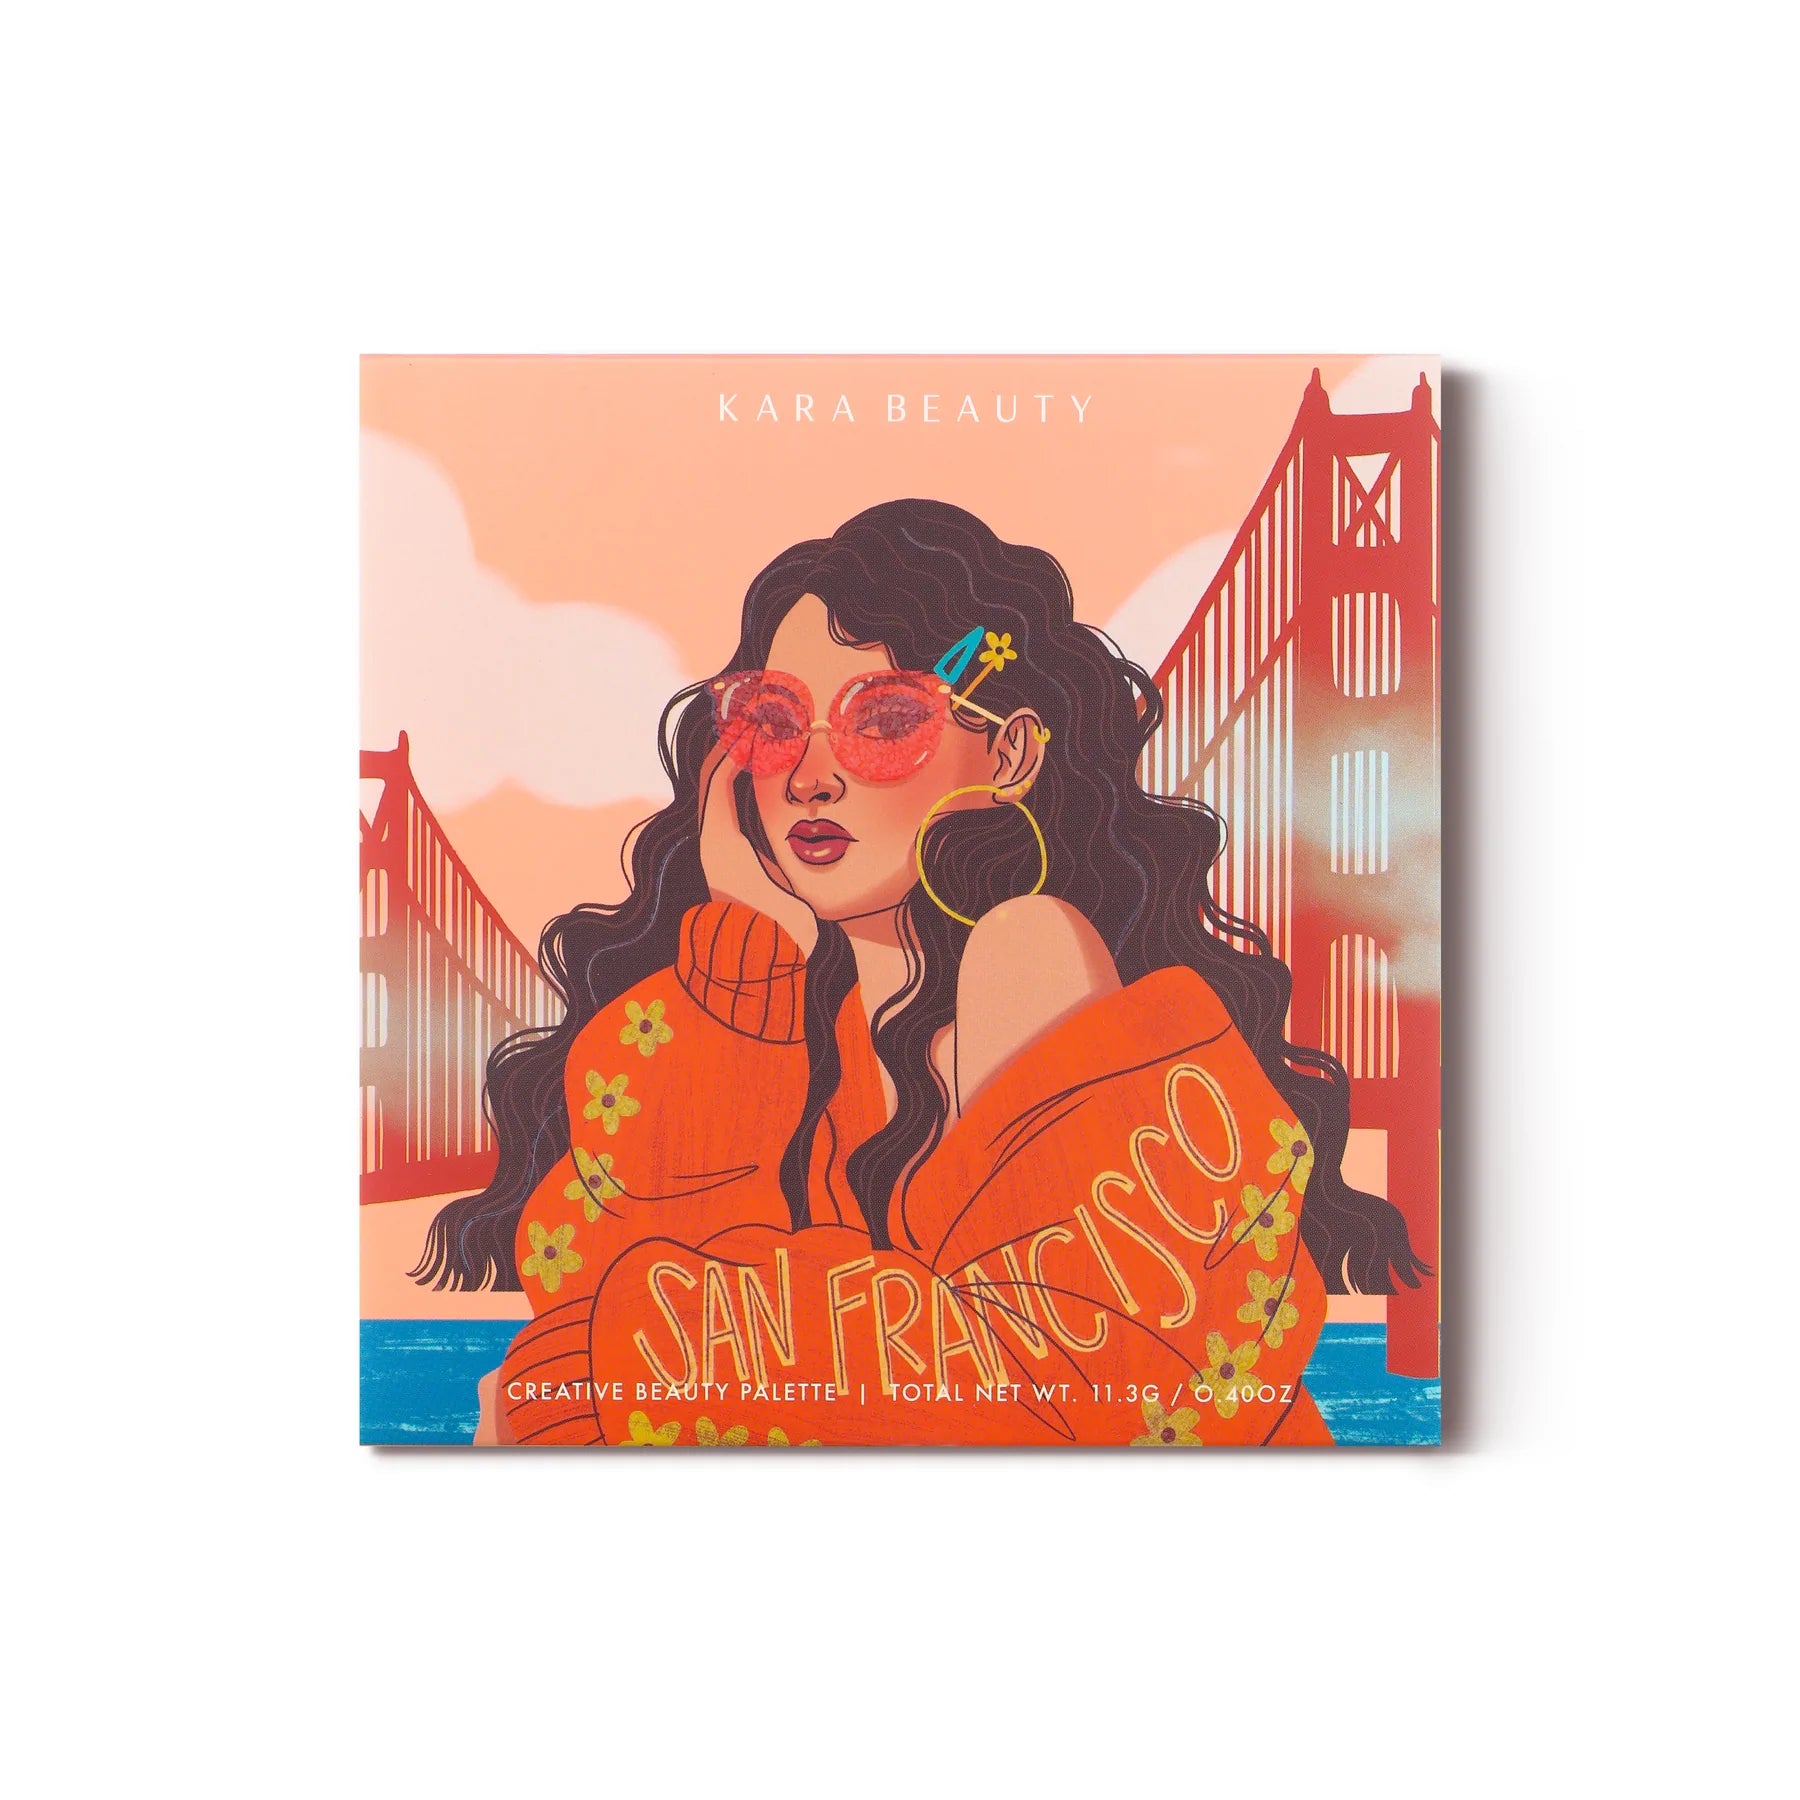 Kara Beauty - San Francisco Palette